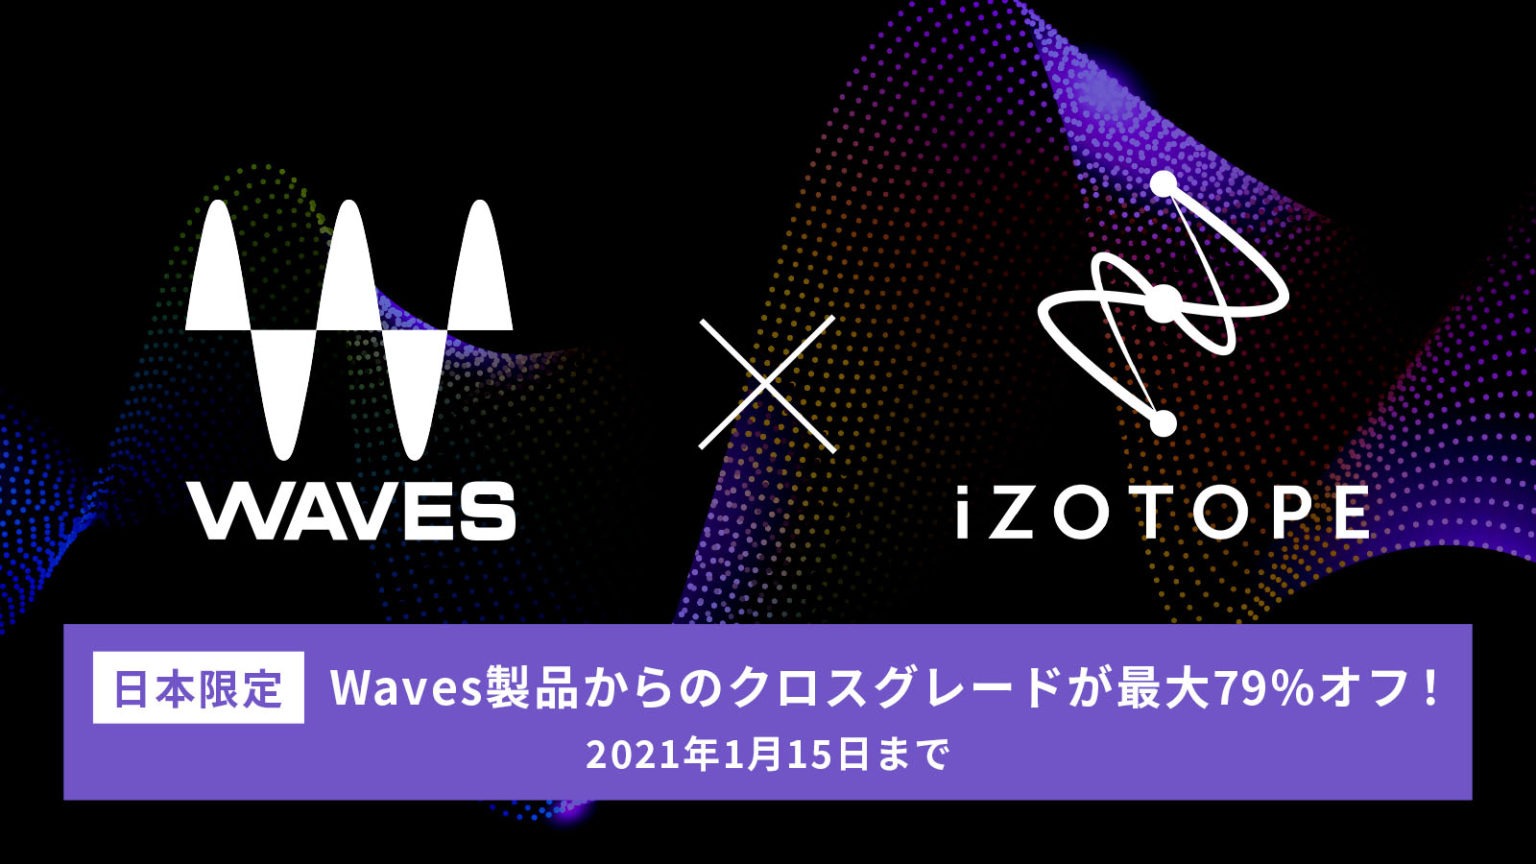 iZotope Waves クロスグレードキャンペーン 最大で79% OFF